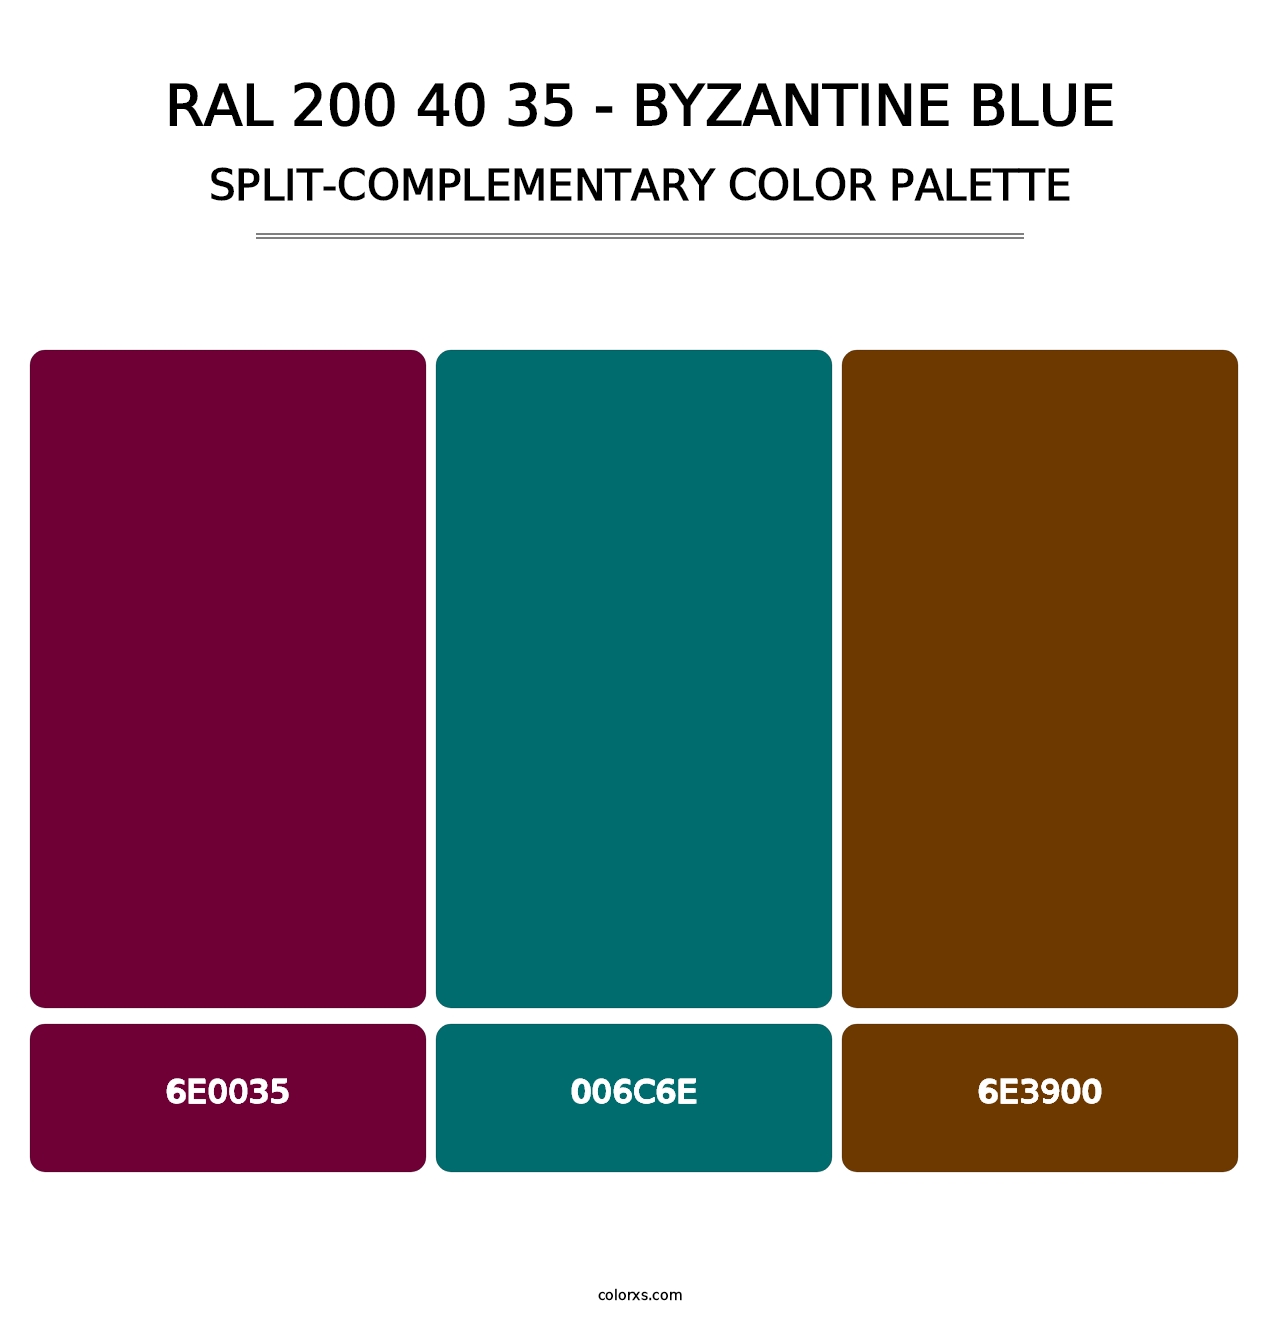 RAL 200 40 35 - Byzantine Blue - Split-Complementary Color Palette